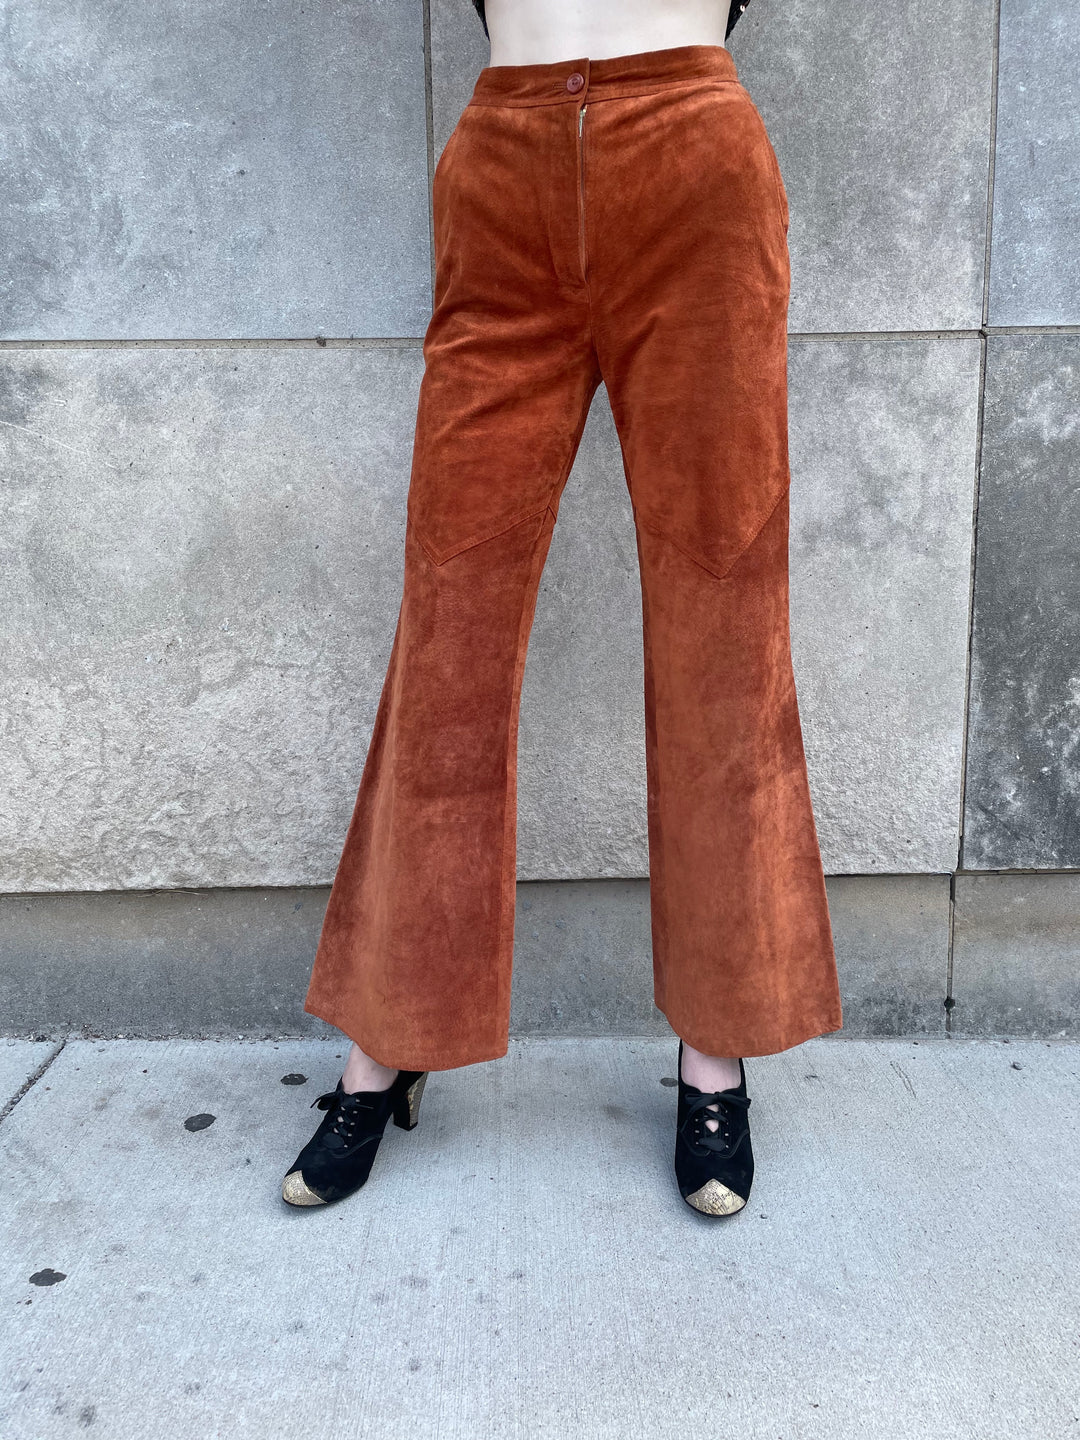 70s Brown Calico Floral Corduroy Bell Bottom Pants – The Hip Zipper  Nashville